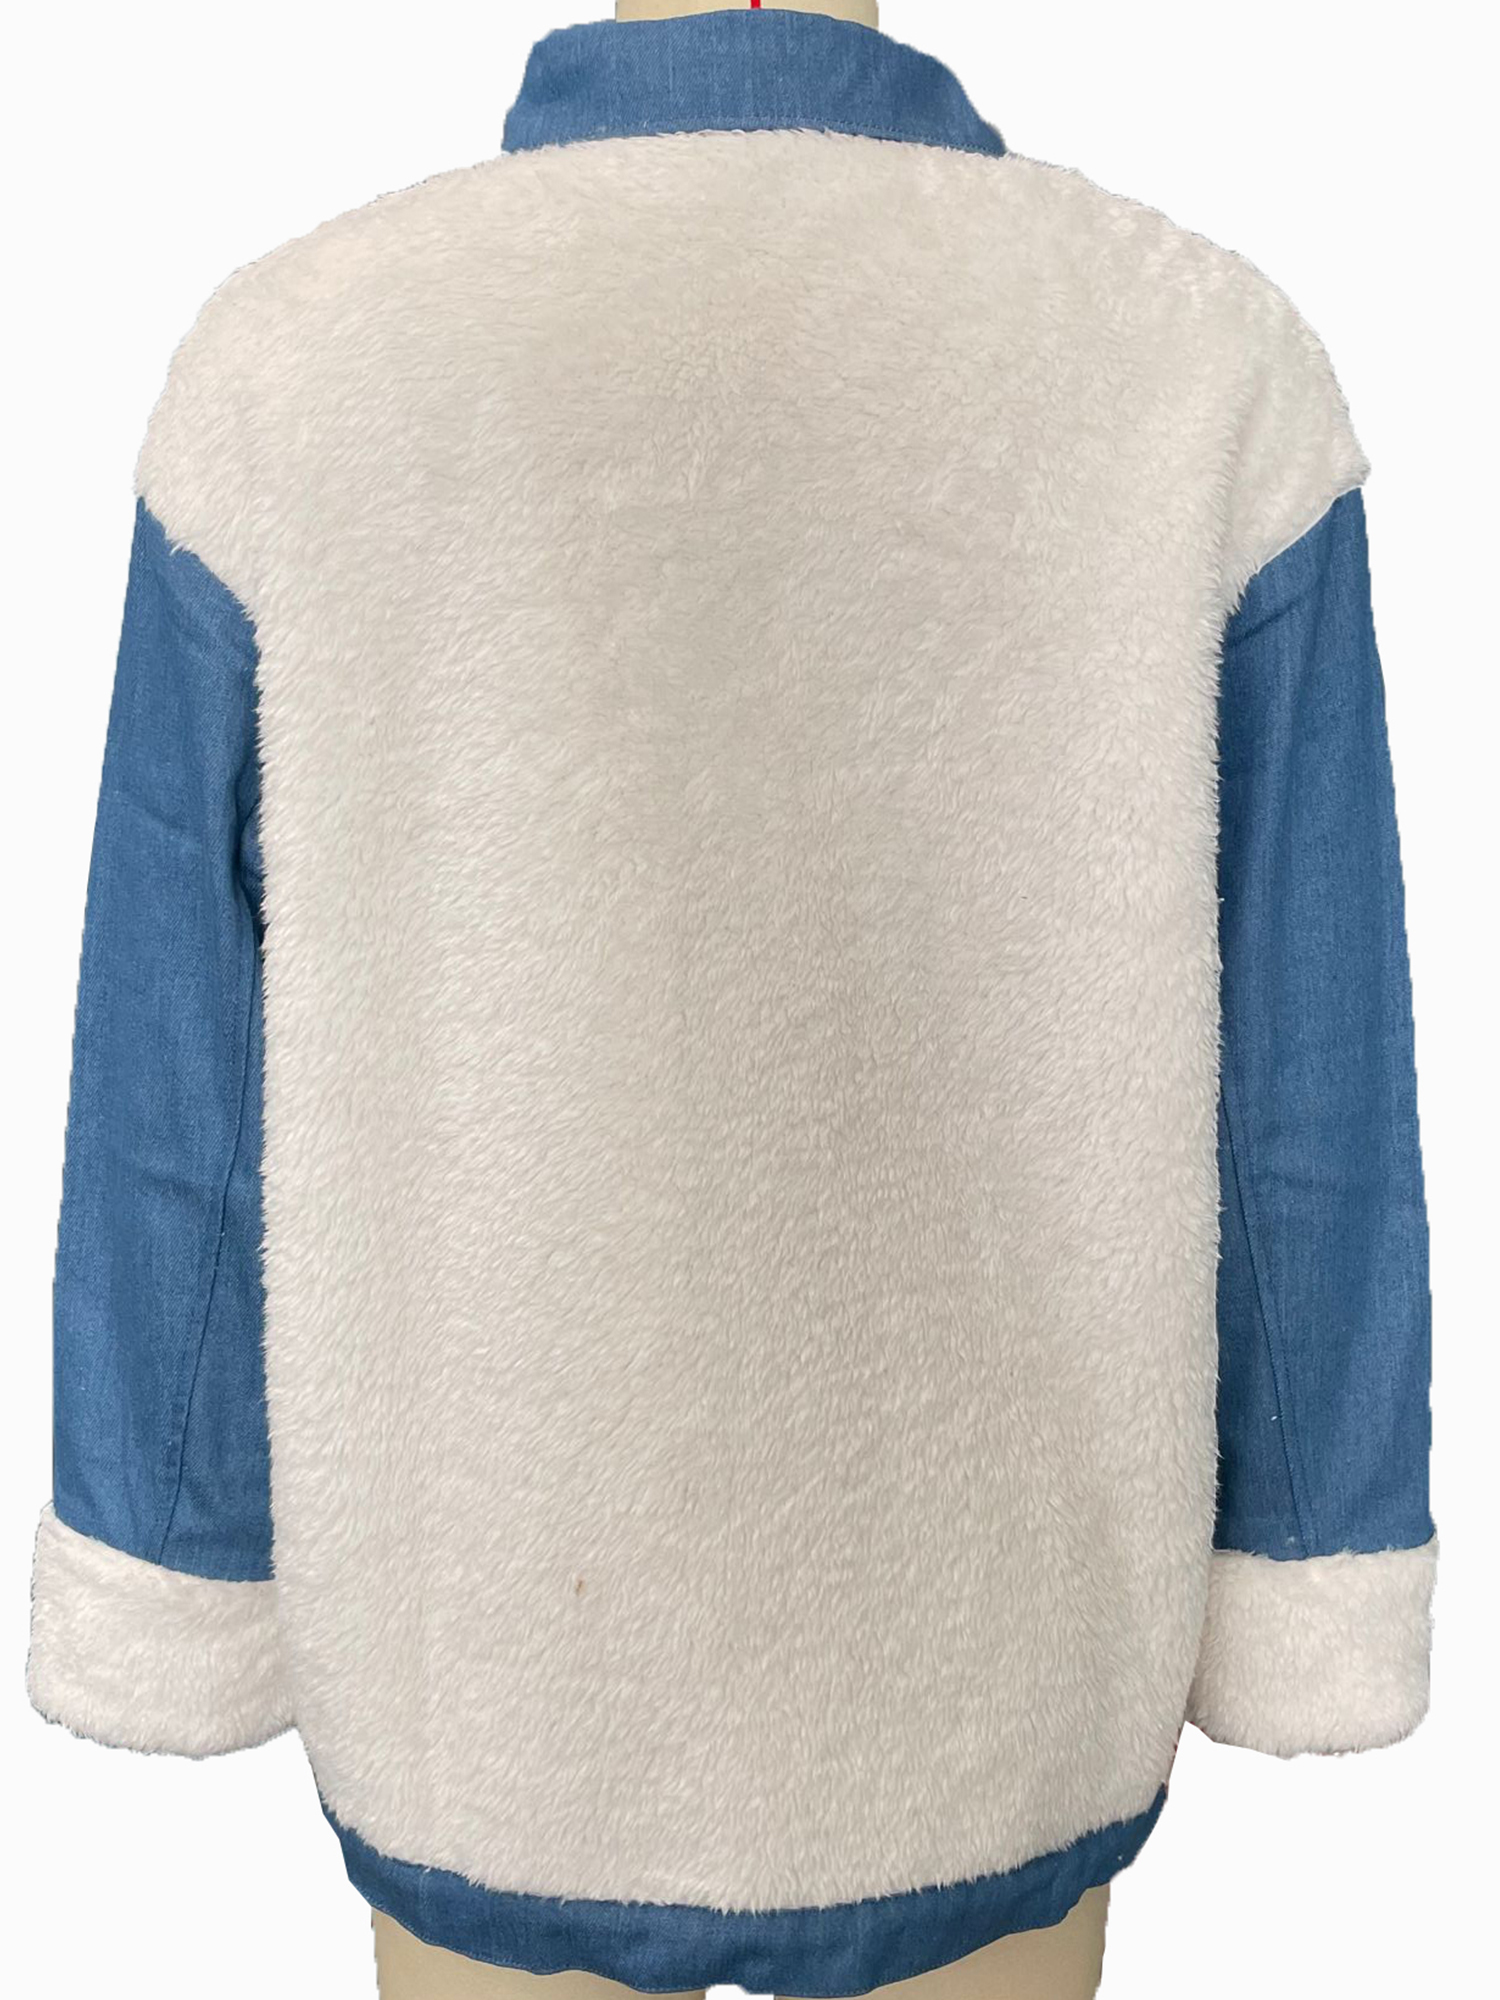 Pudcoco Women Plush Denim Jacket Winter Long Sleeve Patchwork Outerwear - image 3 of 5